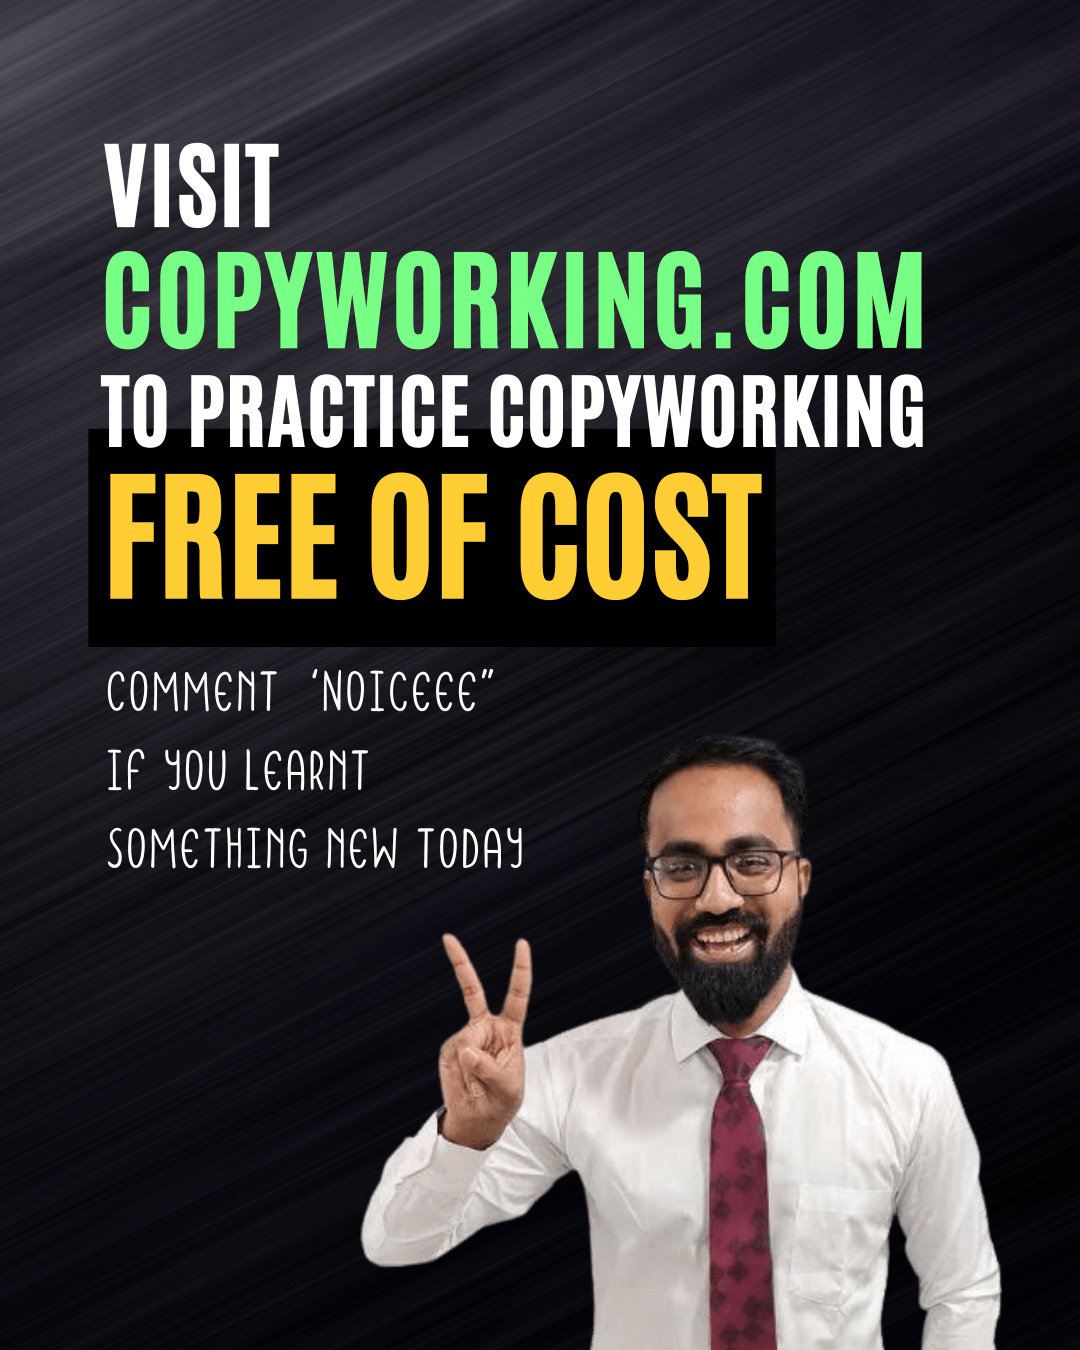 Copyworking.com is your free tool to copyworking 